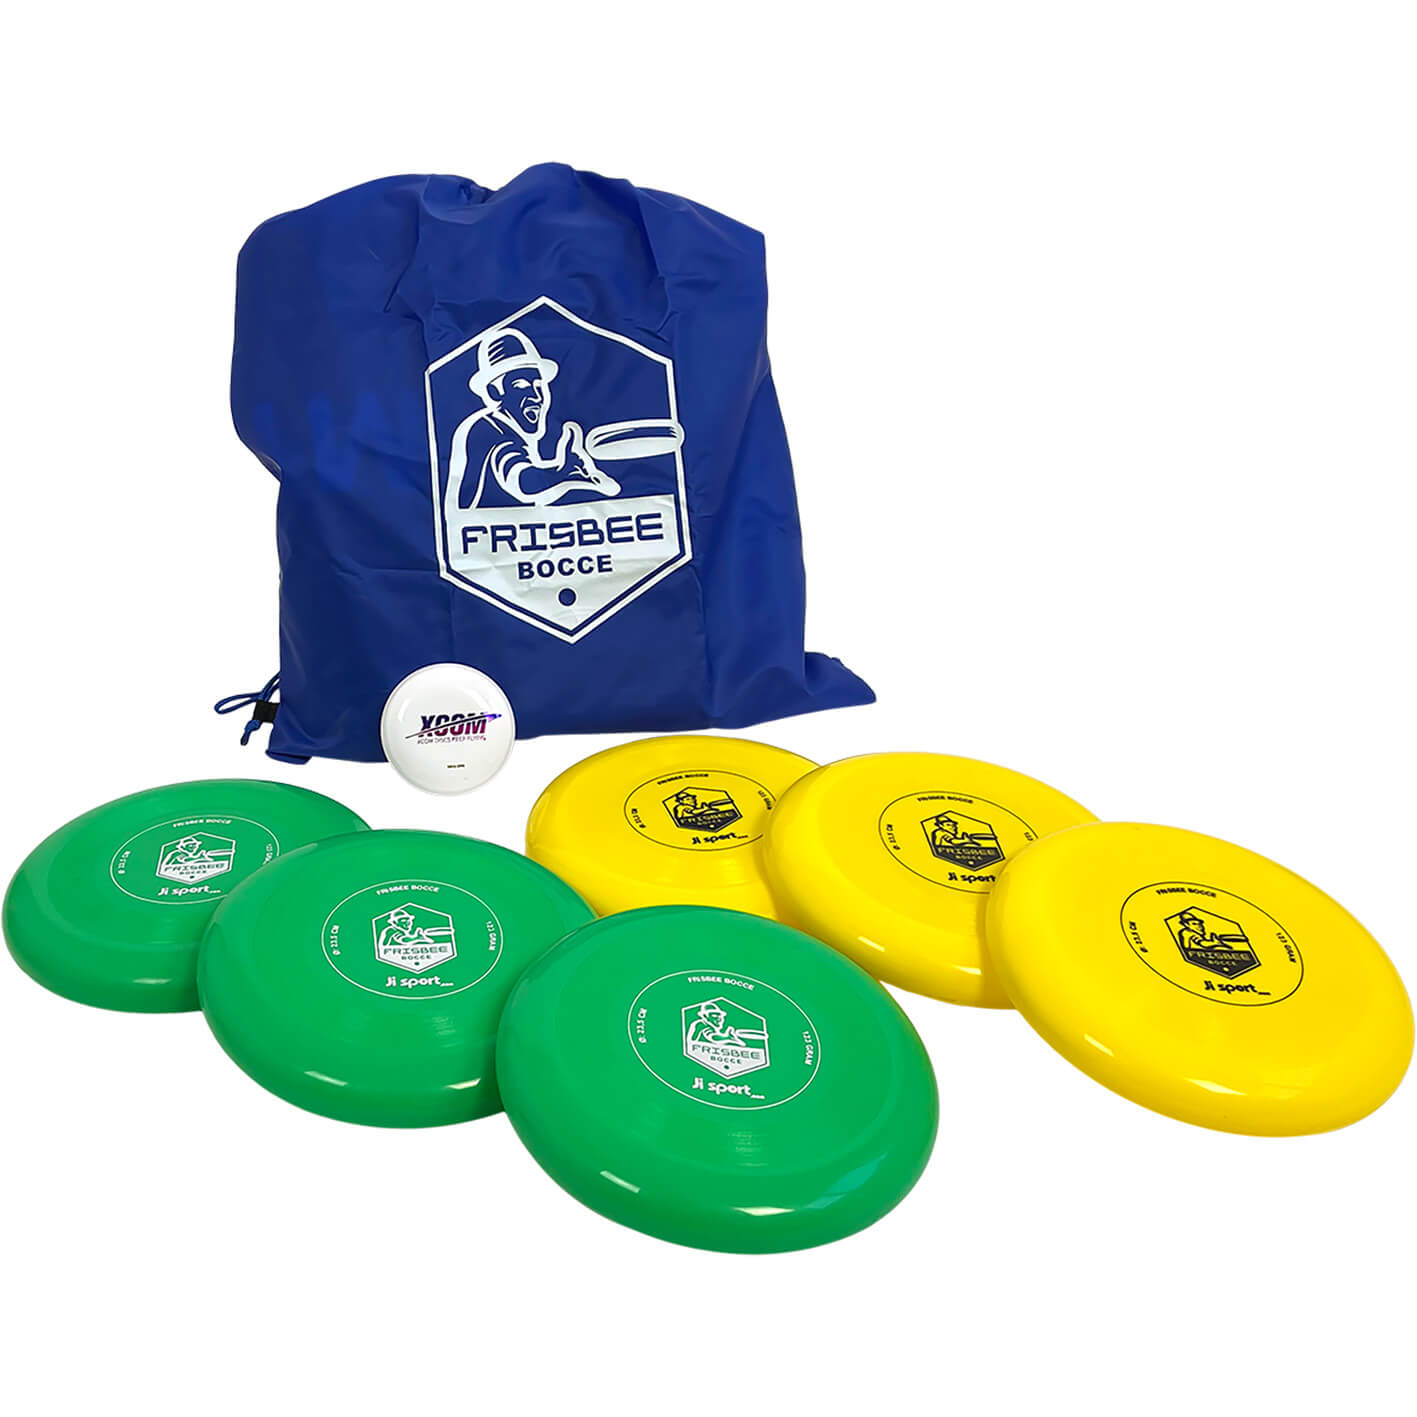 Frisbee boccia pakke - Spil for